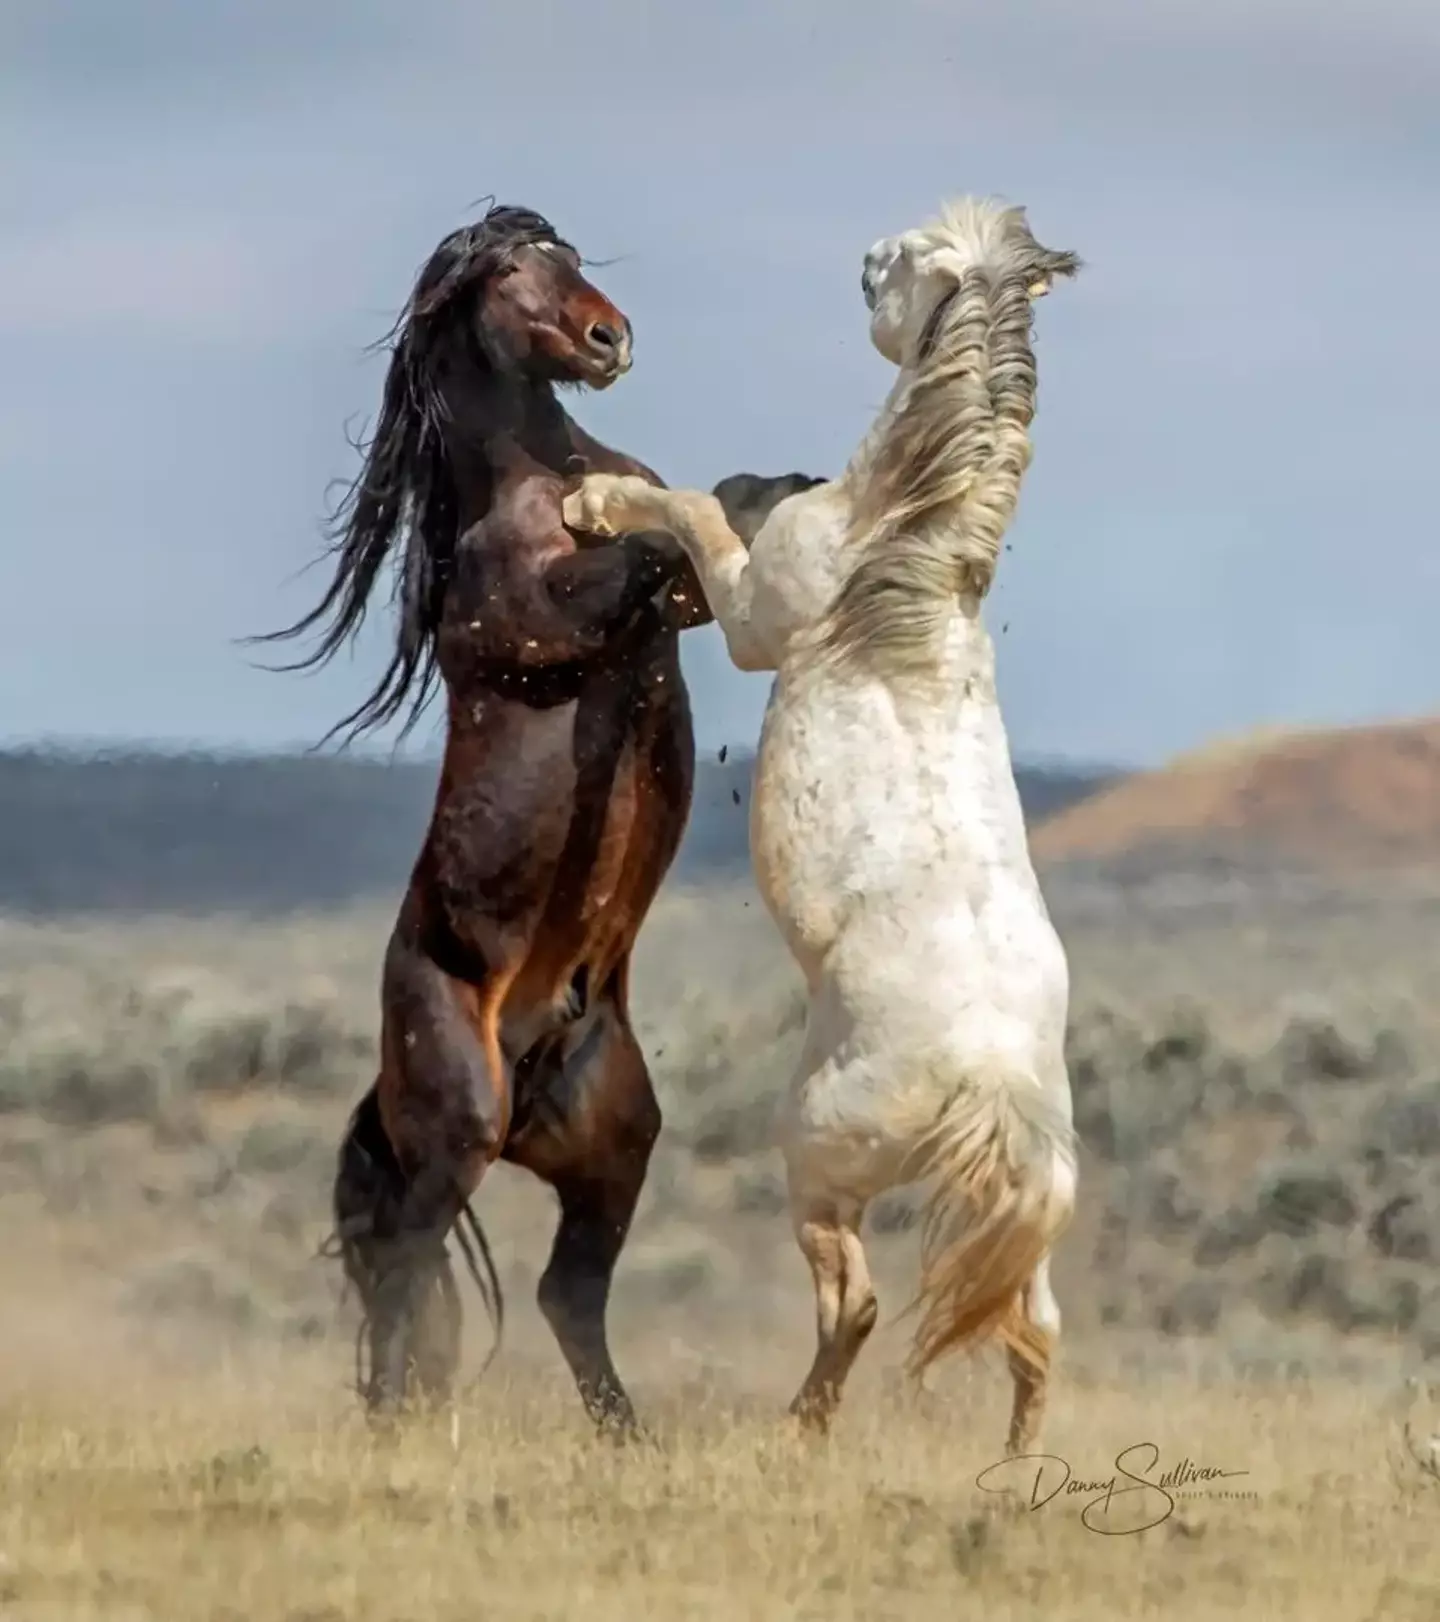 Two horses doing the Tango.